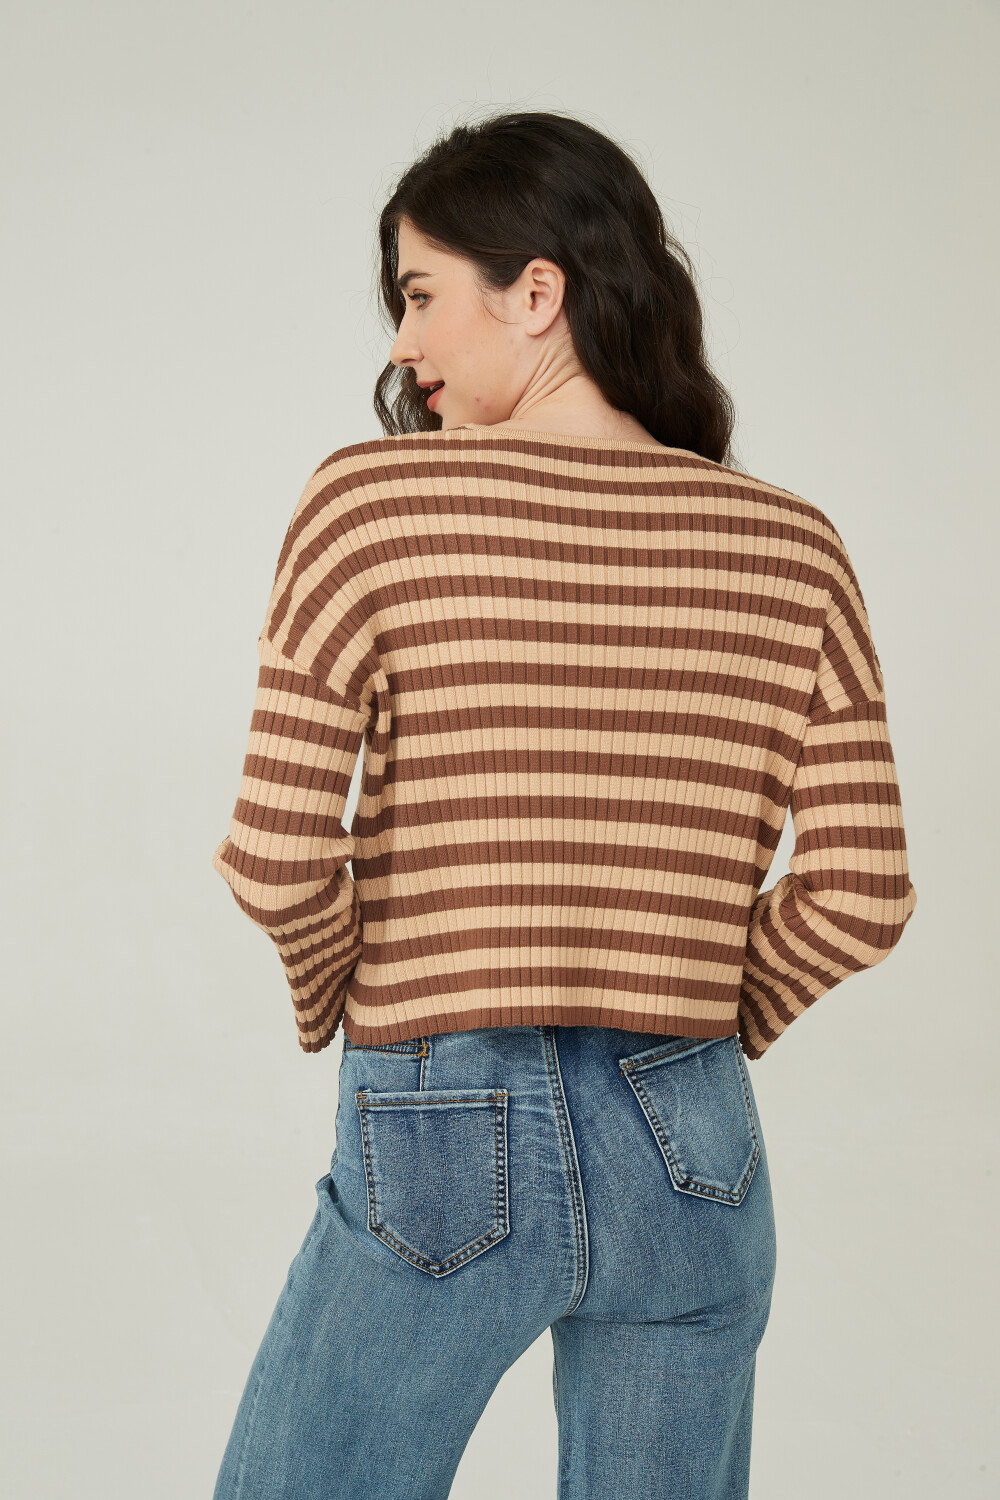 Sweater Zuara Estampado 2